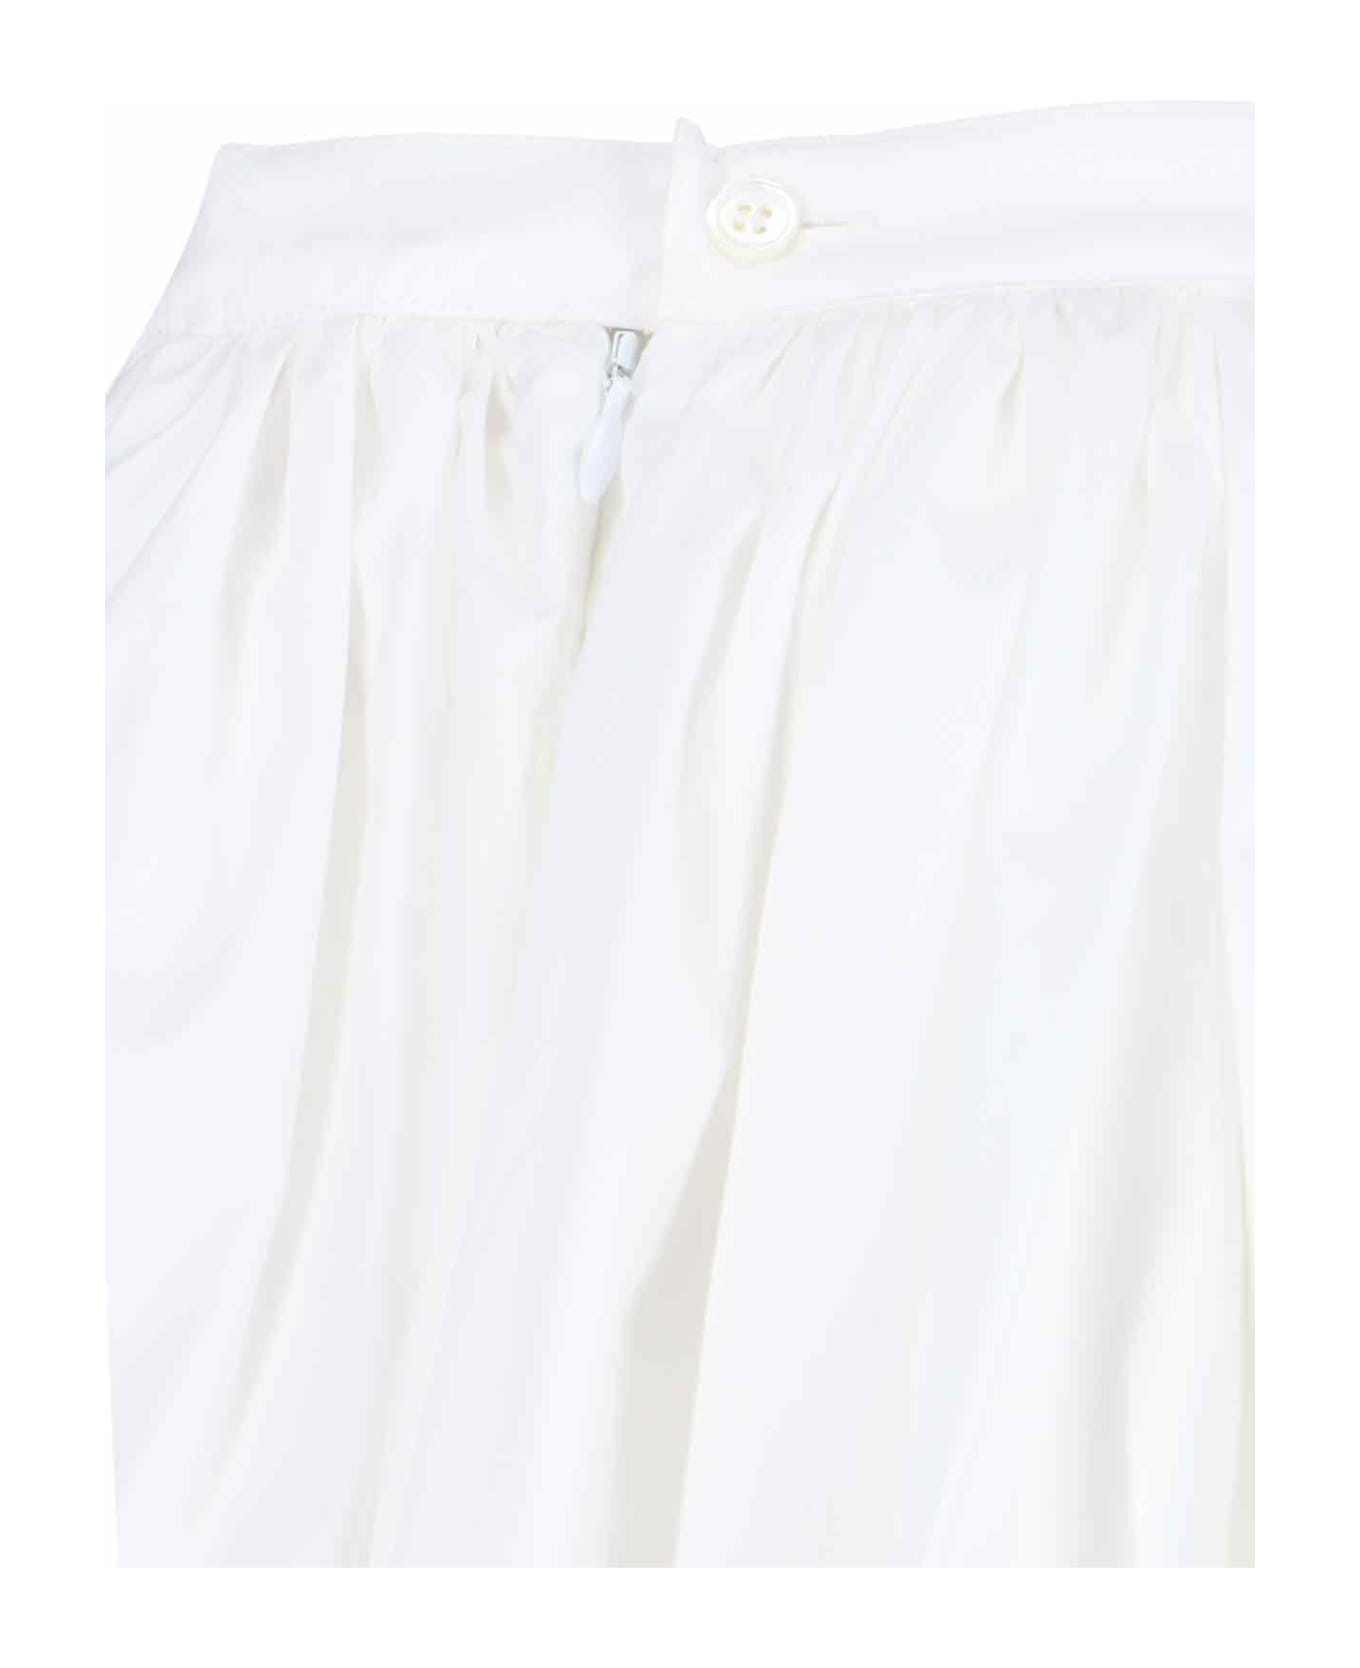 Marni Balloon Midi Skirt - White